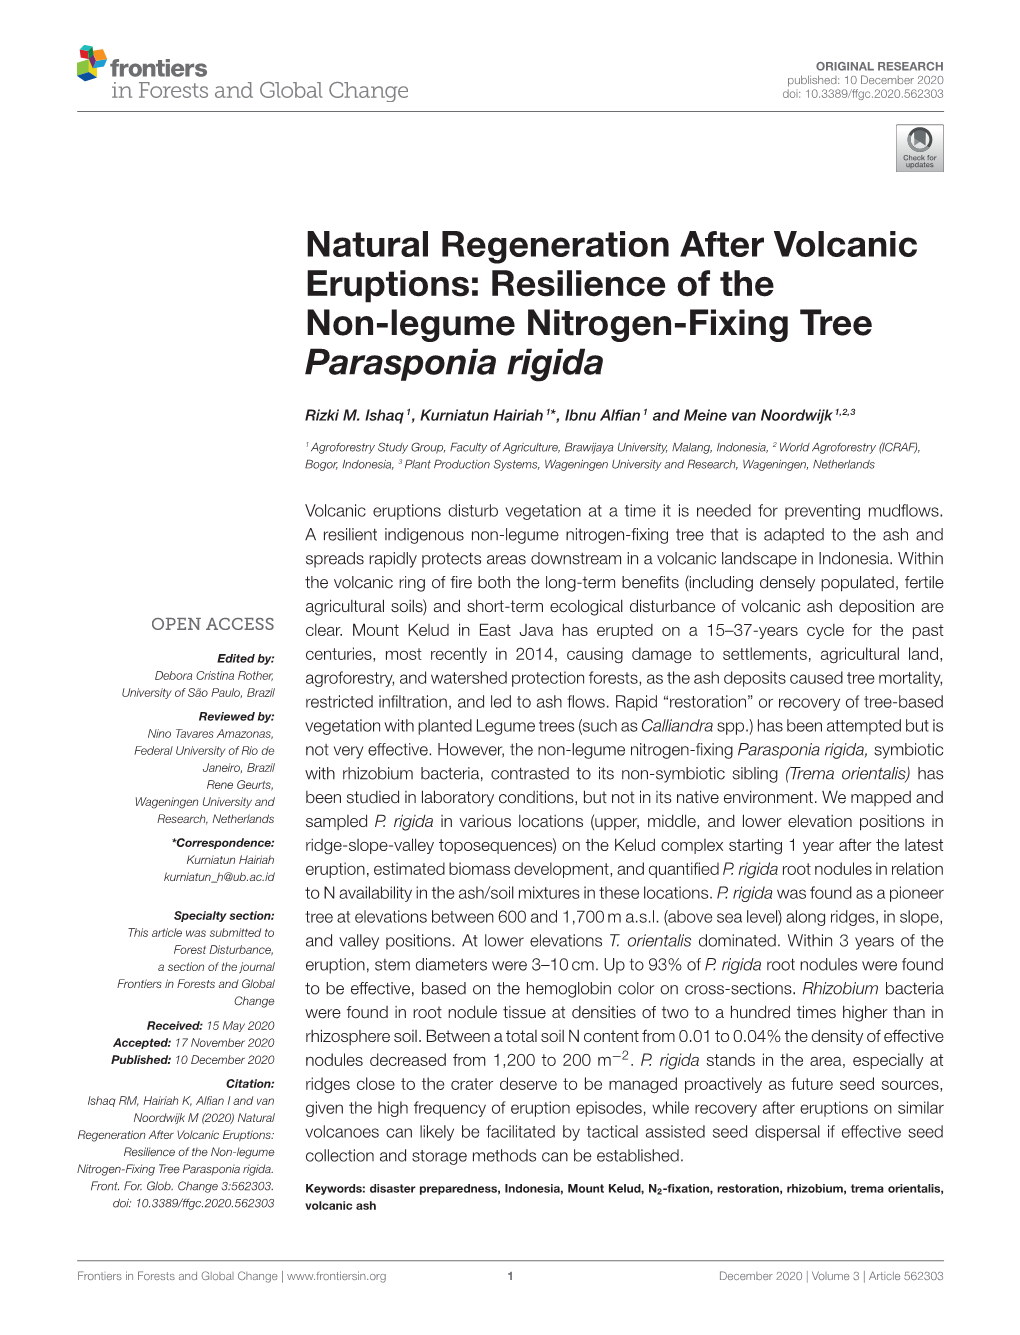 Natural Regeneration After Volcanic Eruptions: Resilience of the Non-Legume Nitrogen-Fixing Tree Parasponia Rigida